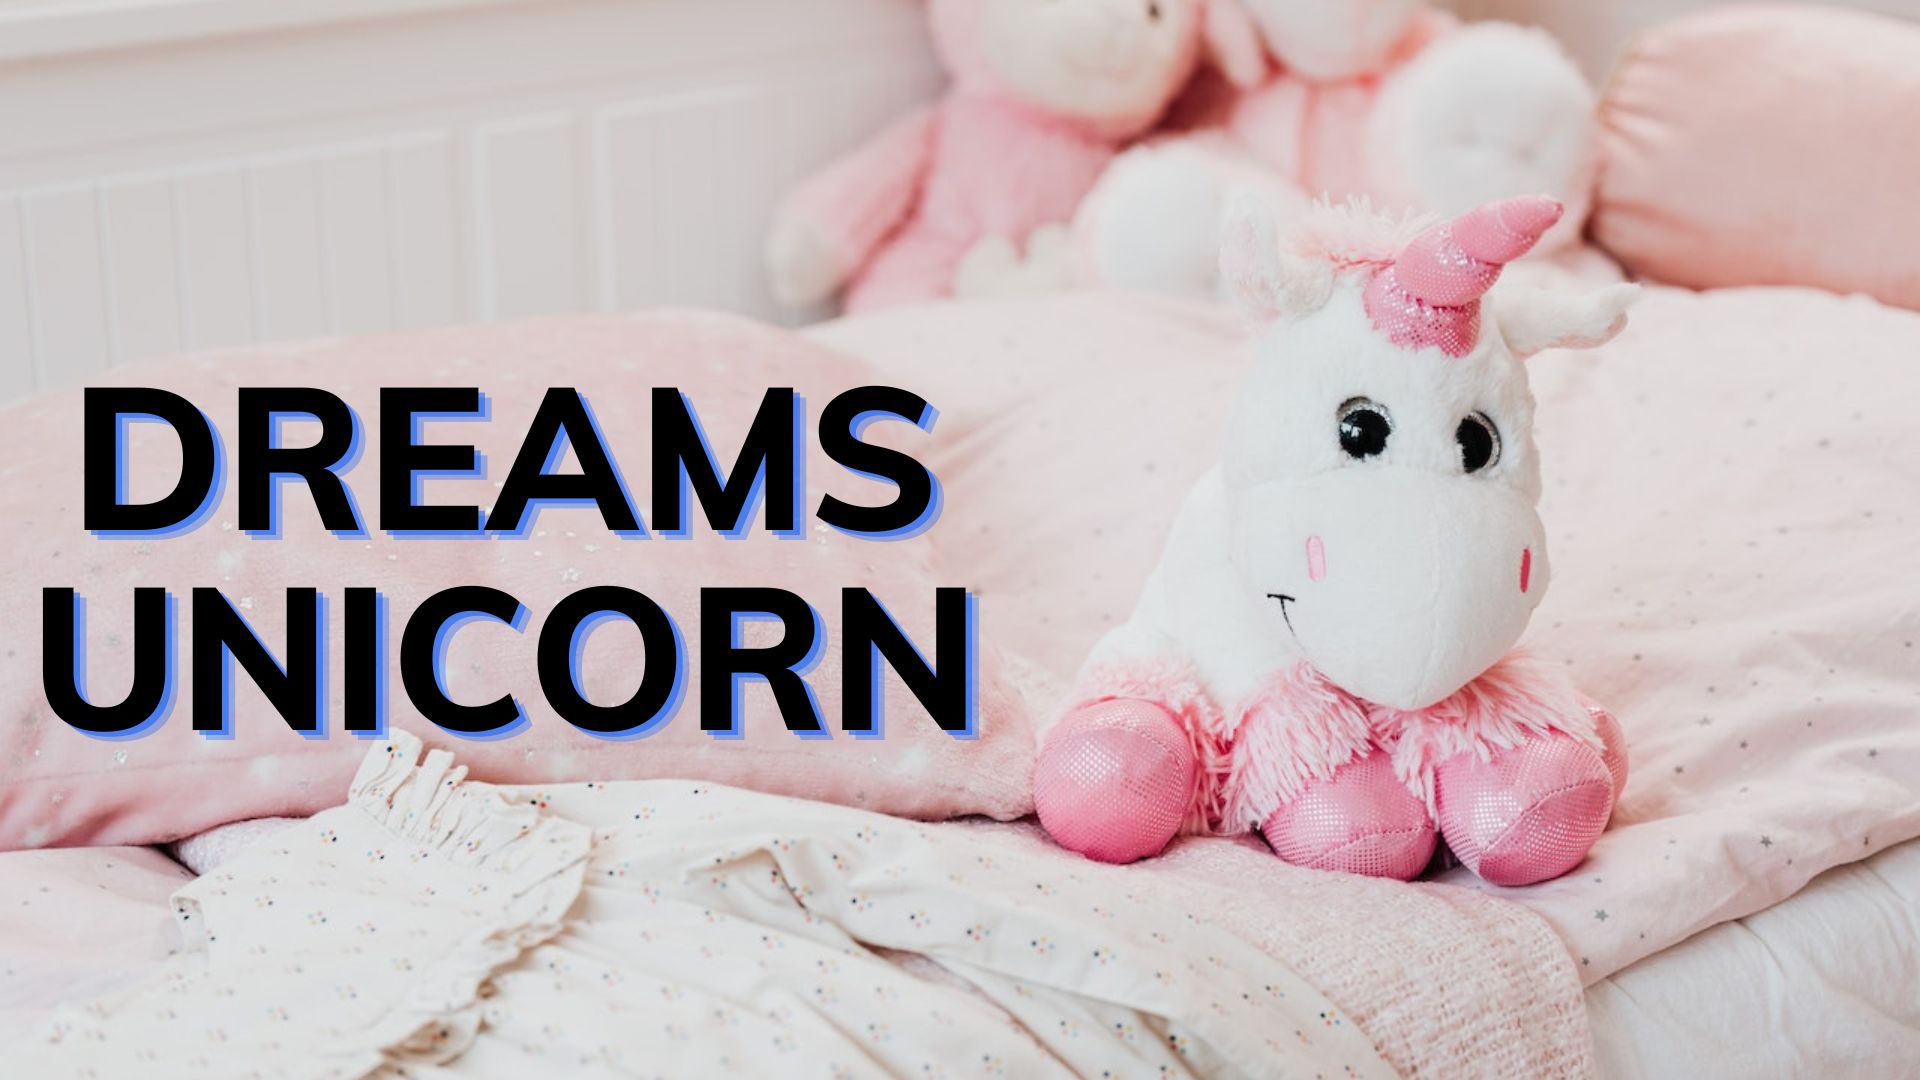 Dreams Unicorn - Represents Faithfulness, Purity, And Kindness